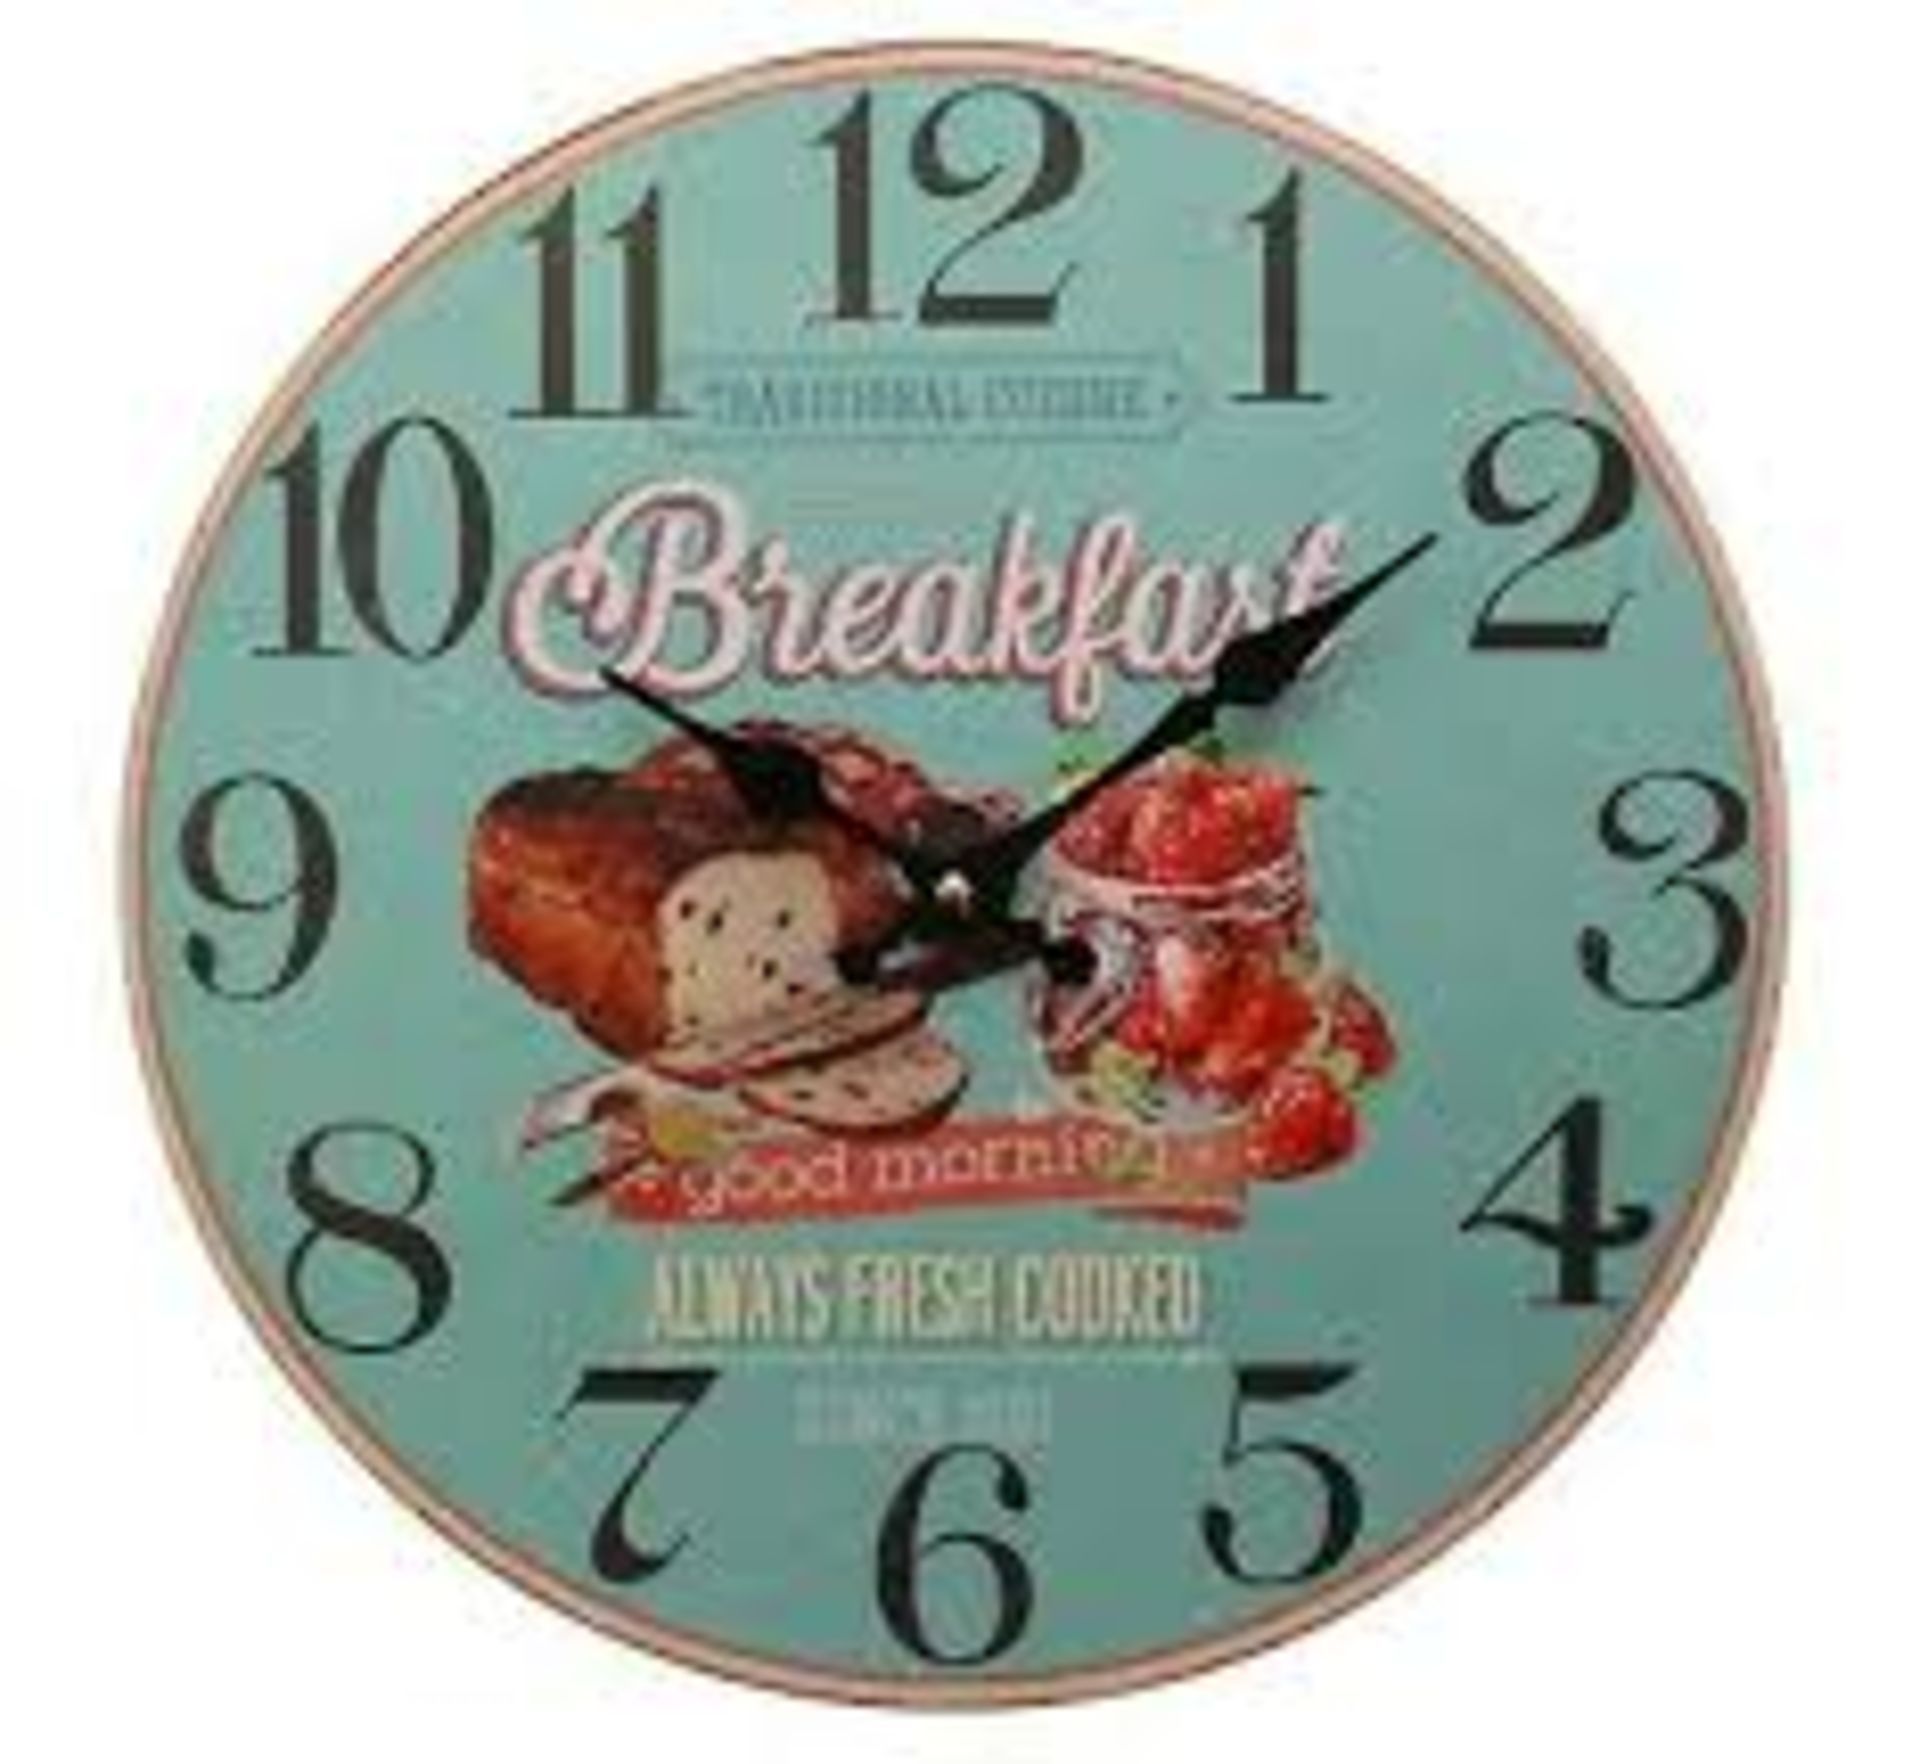 New Blue Breakfast Wall Clock in Original Packaging